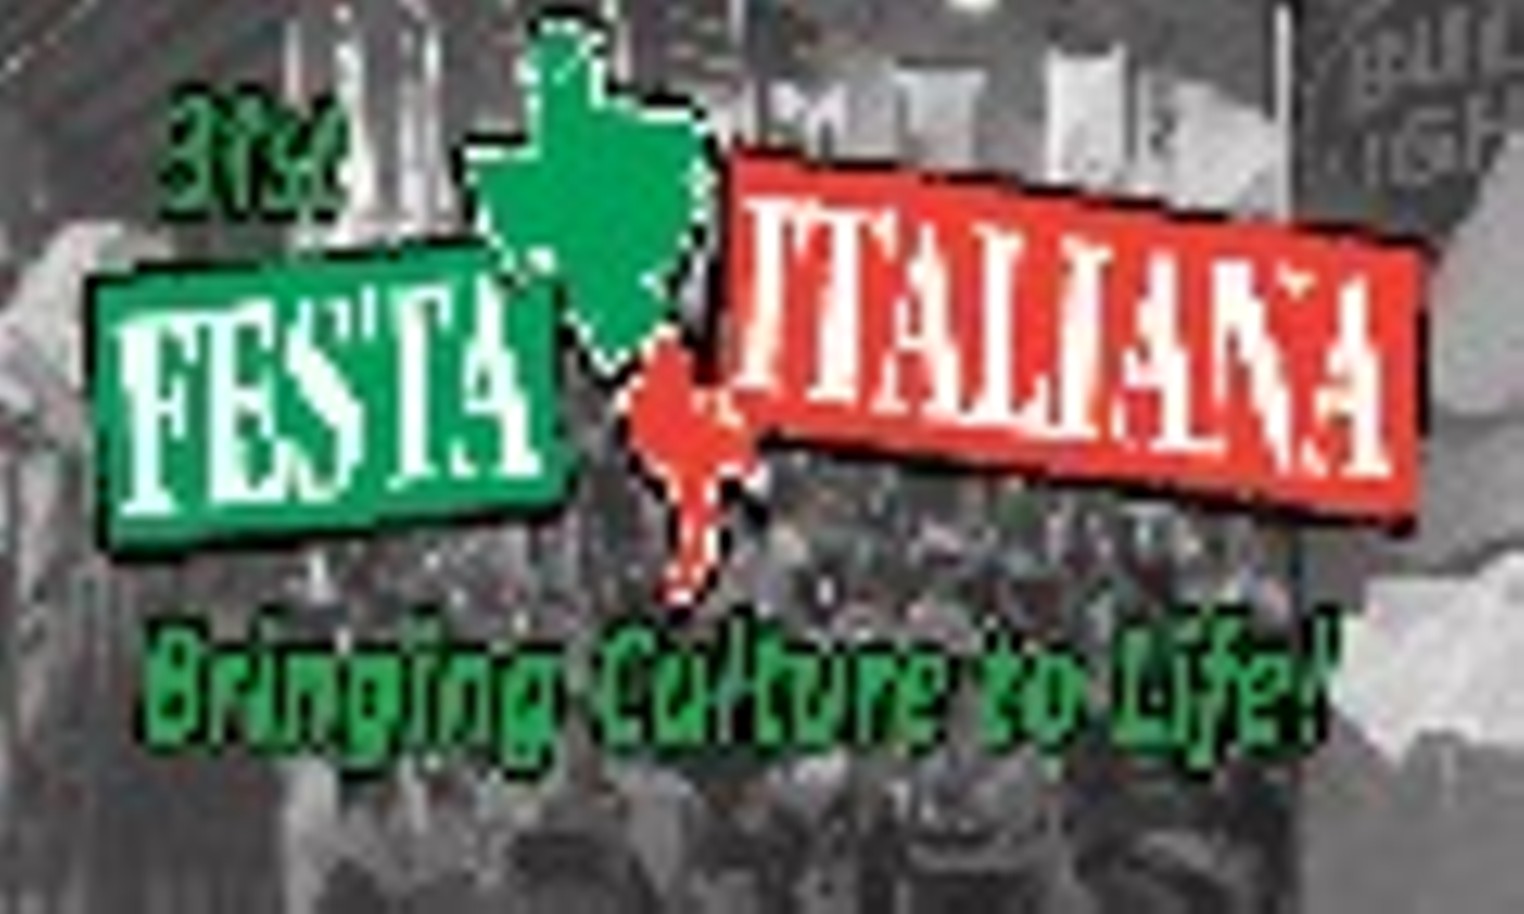 Festa Italiana Houston Houston Press The Leading Independent News